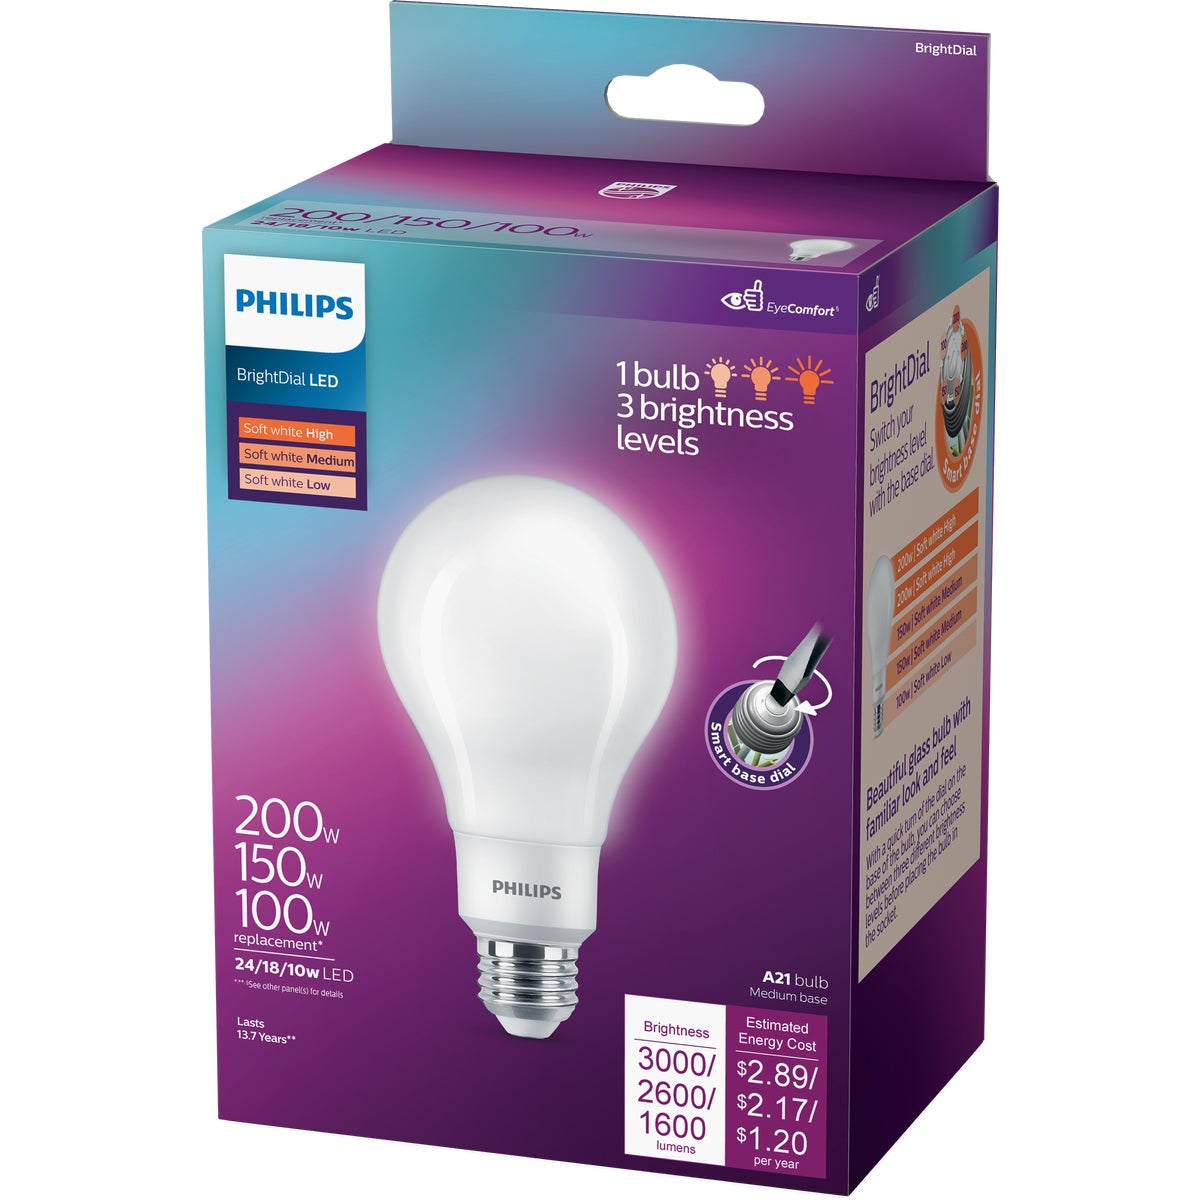 Philips BrightDial 200/150/100W Equivalent Soft White A21 Medium LED Light Bulb